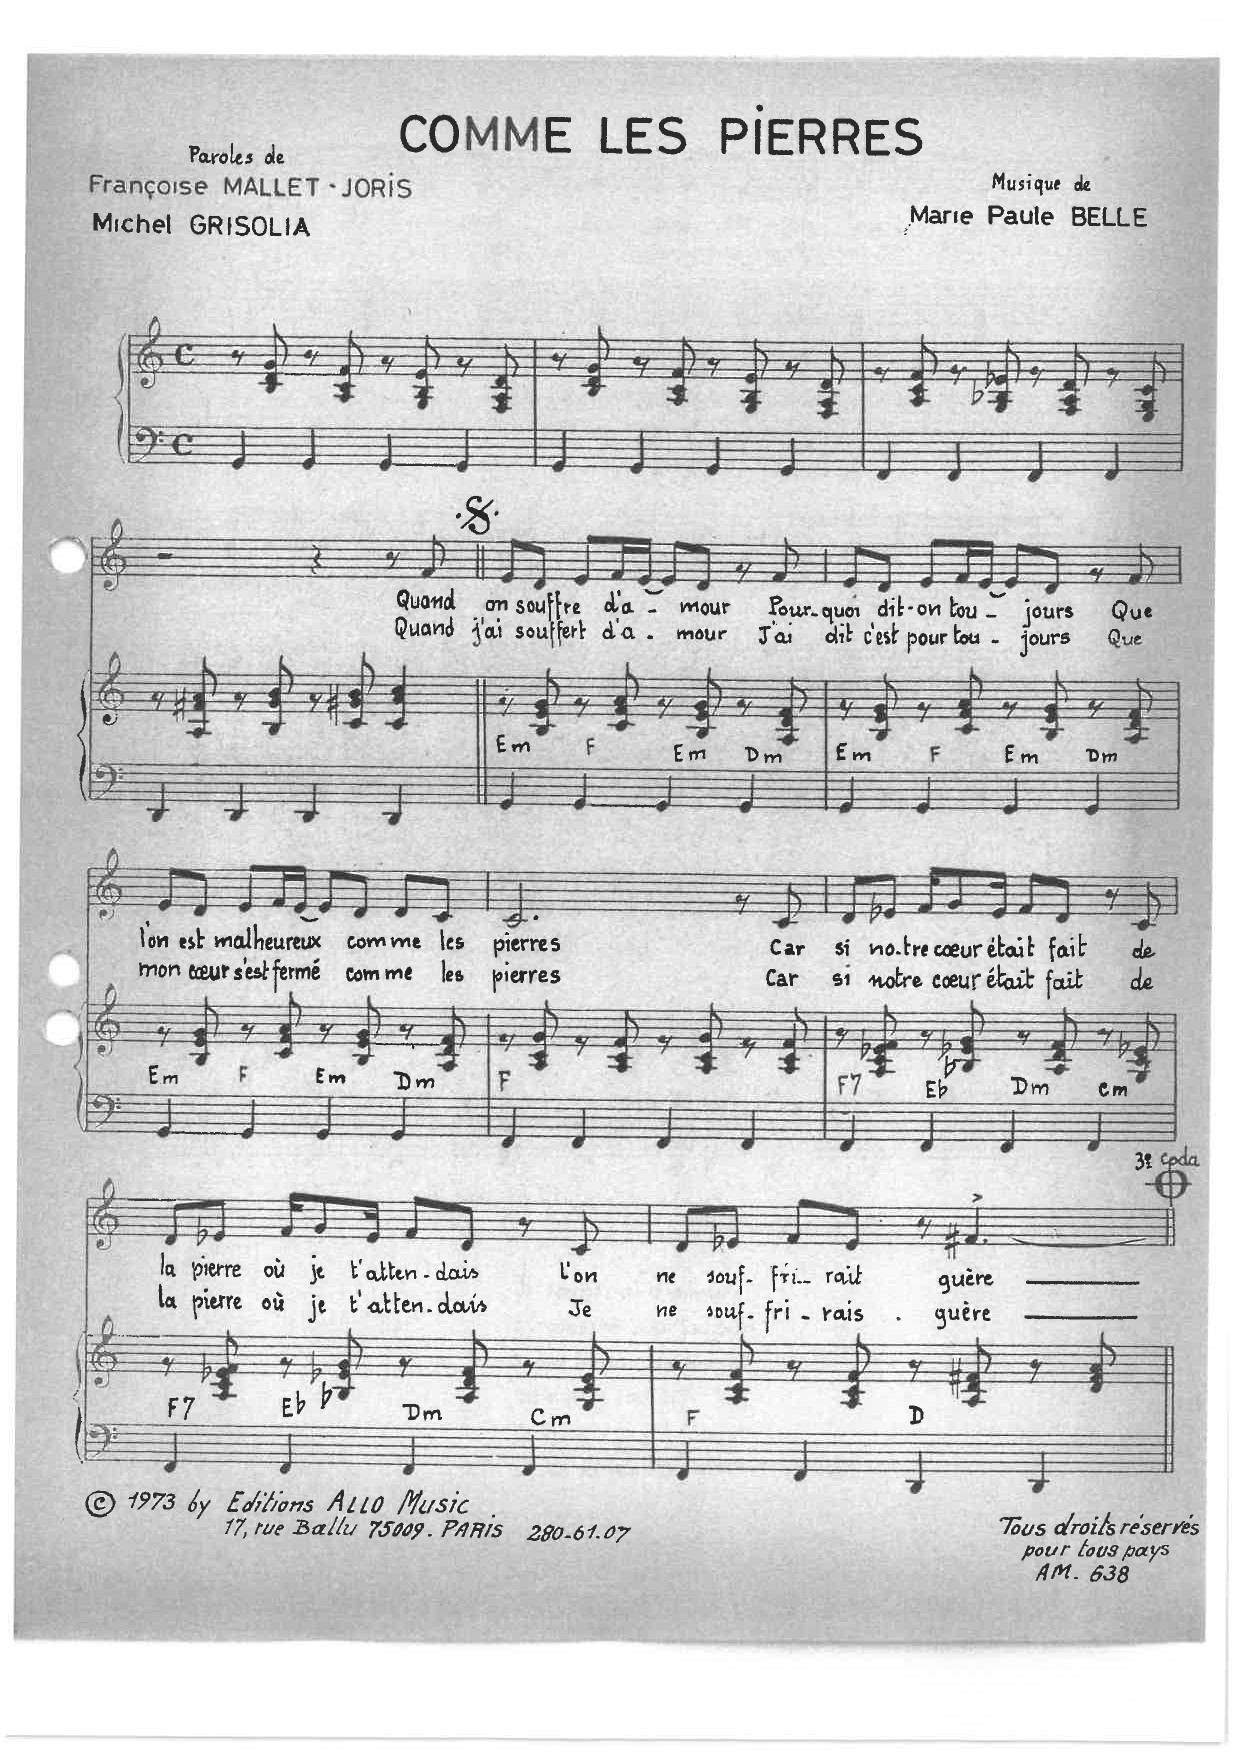 Michel Grisolia, Françoise Mallet-Joris and Marie Paule Belle Comme Les Pierres Sheet Music Notes & Chords for Piano & Vocal - Download or Print PDF